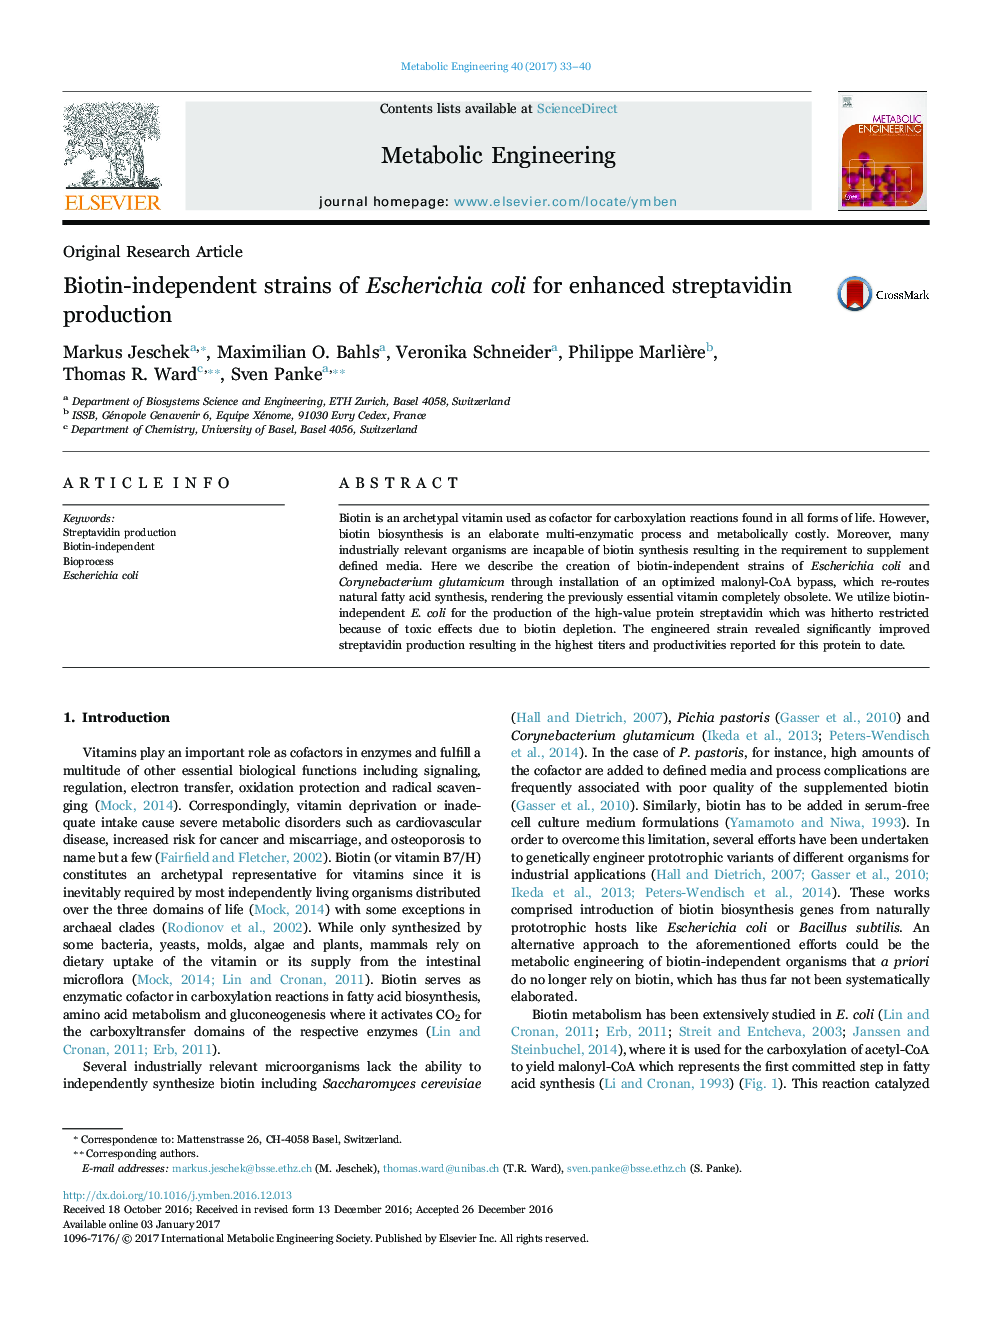 Original Research ArticleBiotin-independent strains of Escherichia coli for enhanced streptavidin production